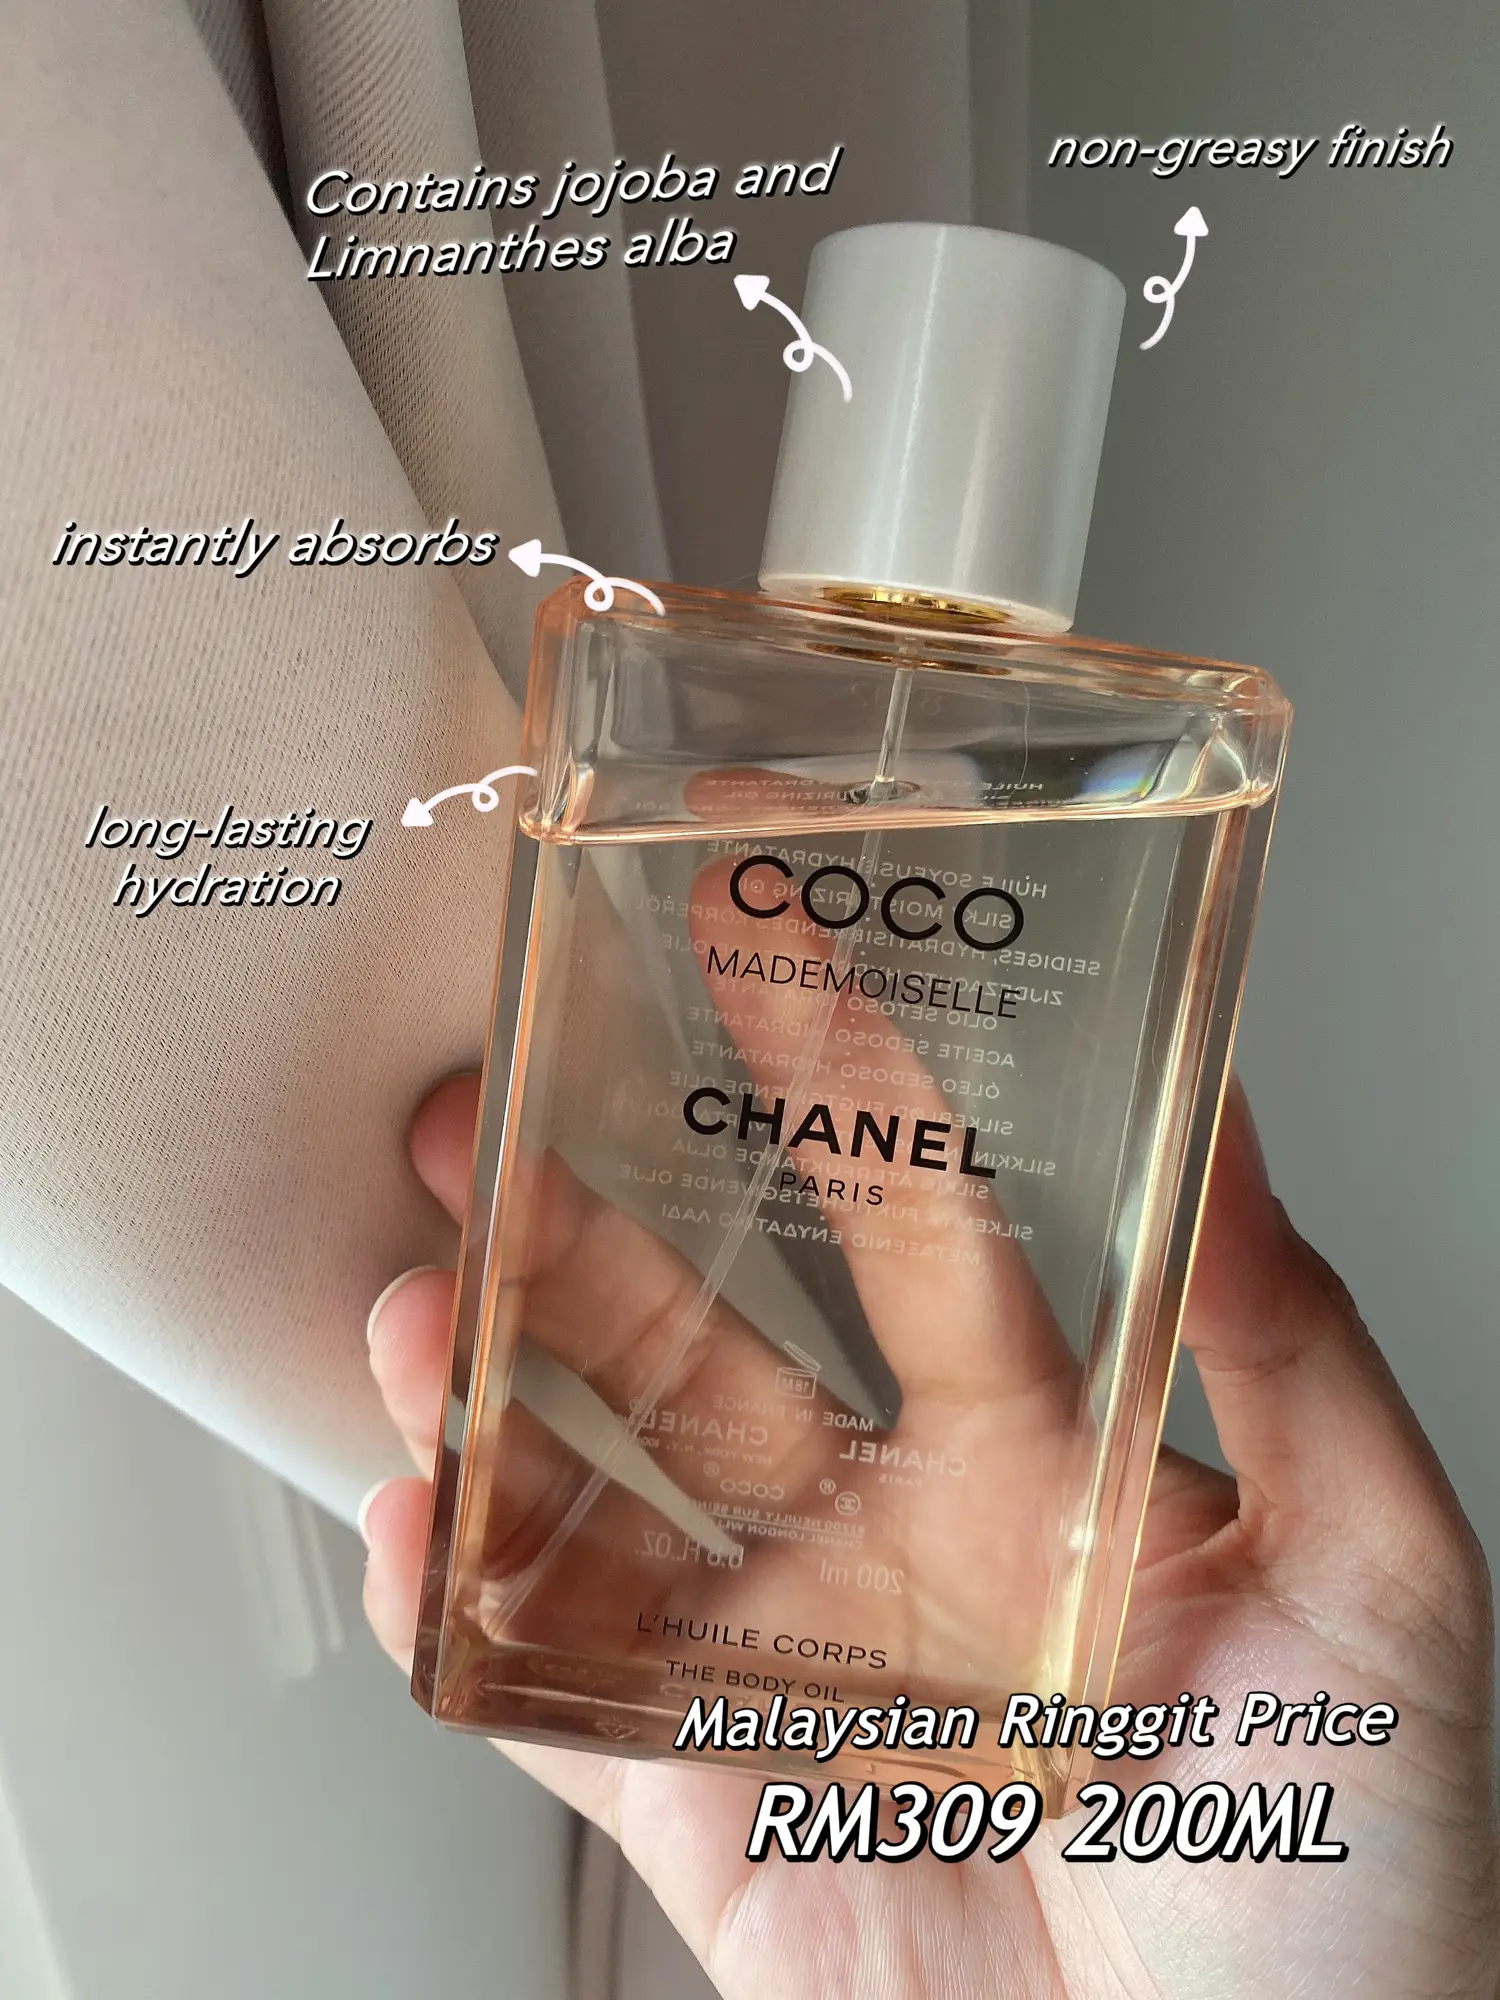 Chanel Body Oil - is it worth it?, Galeri disiarkan oleh J.Danielle Fzii